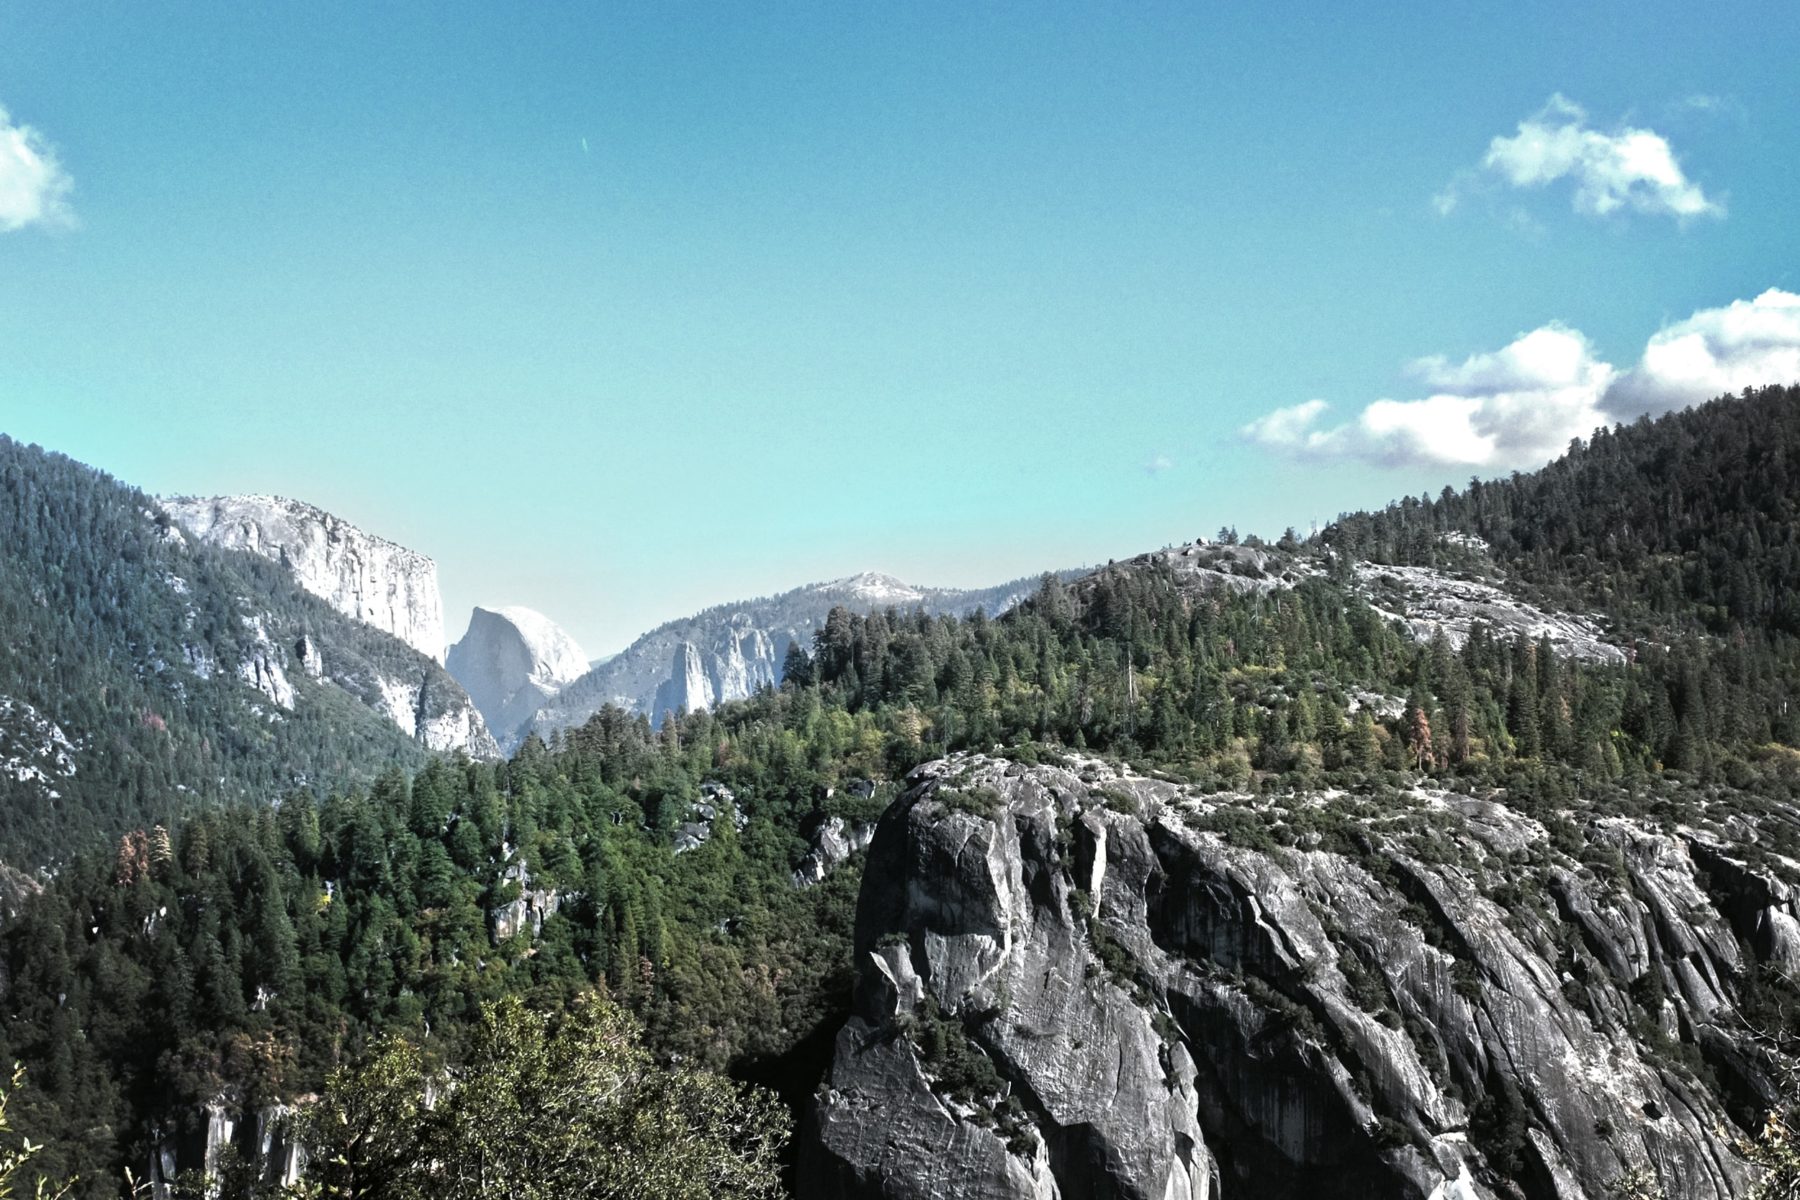 The granite peaks in a mountainous, alpine region.